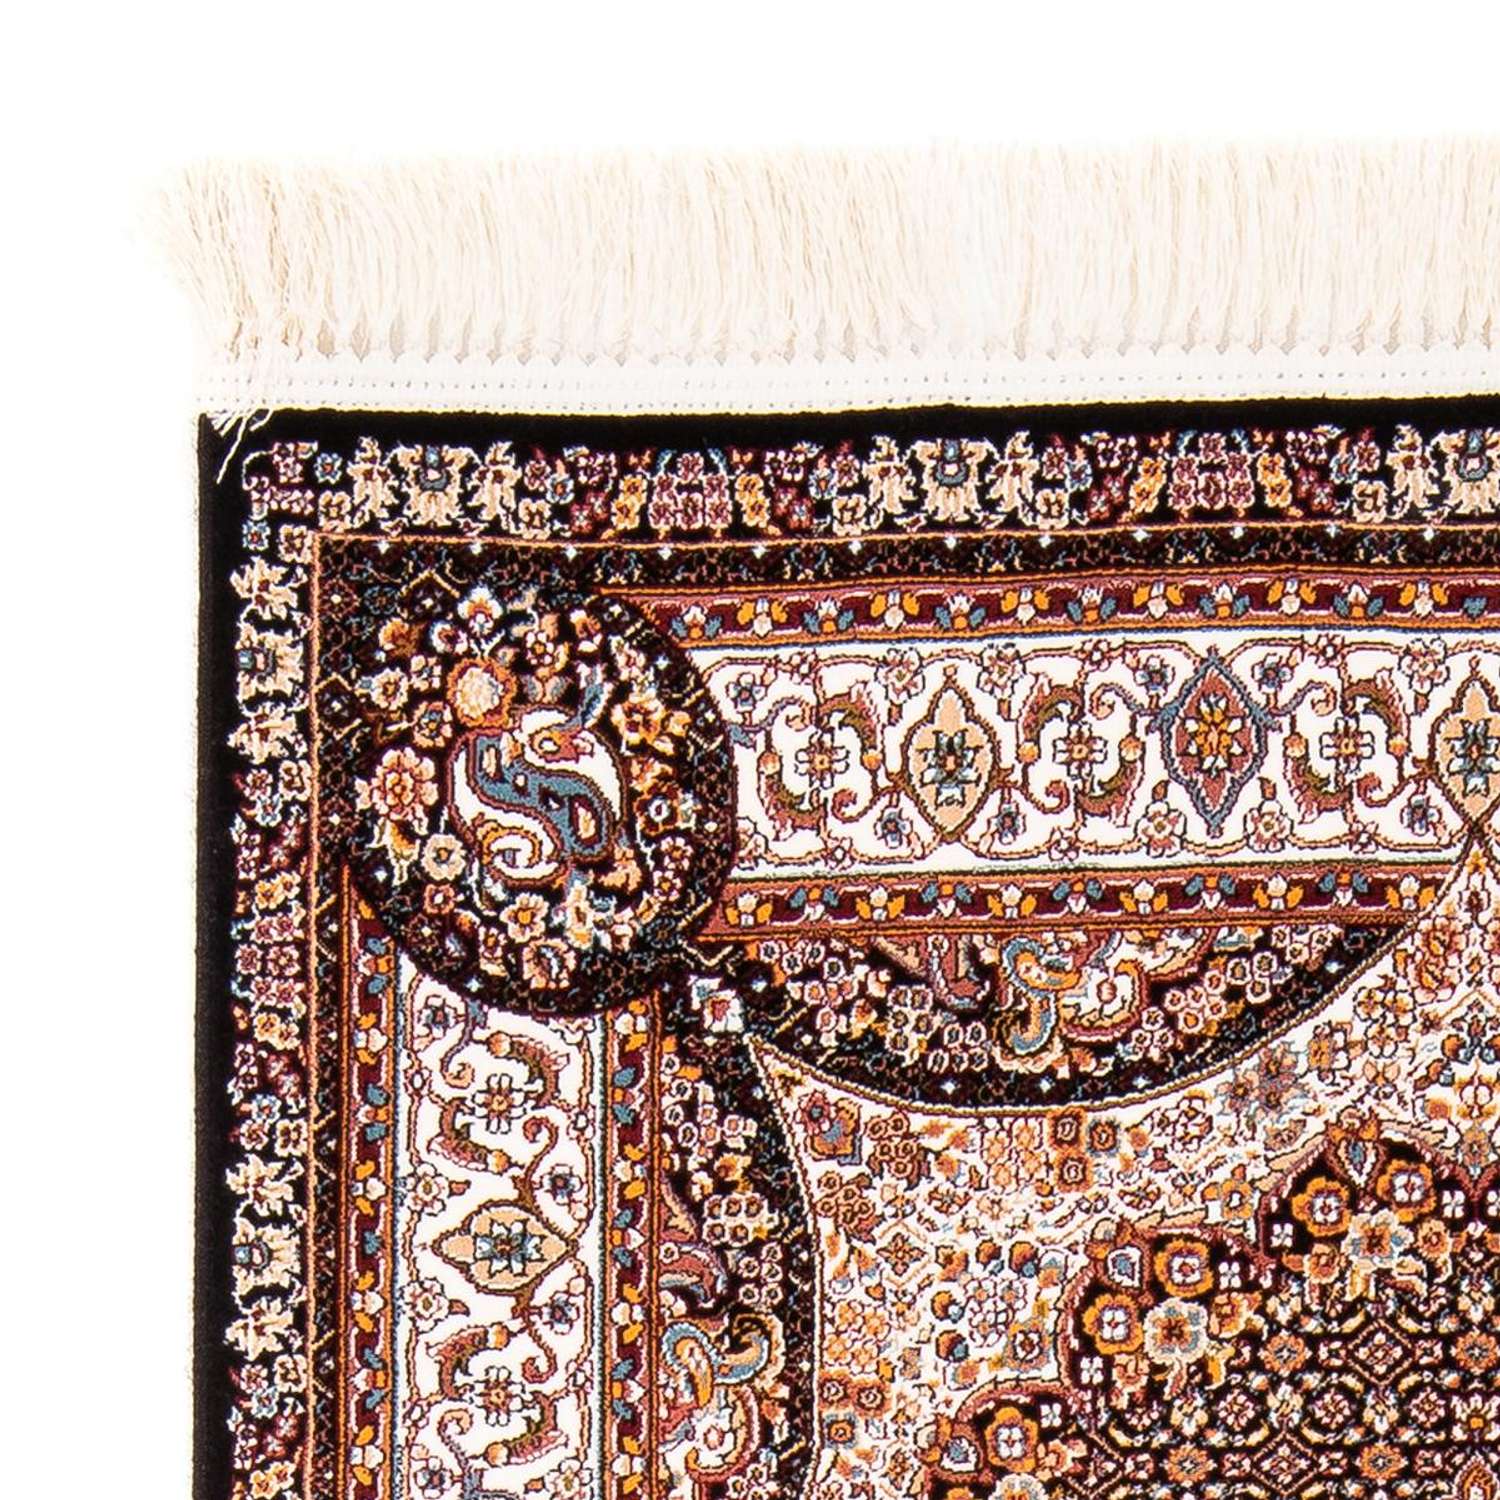 Orientalsk tæppe - Aras - rektangulær